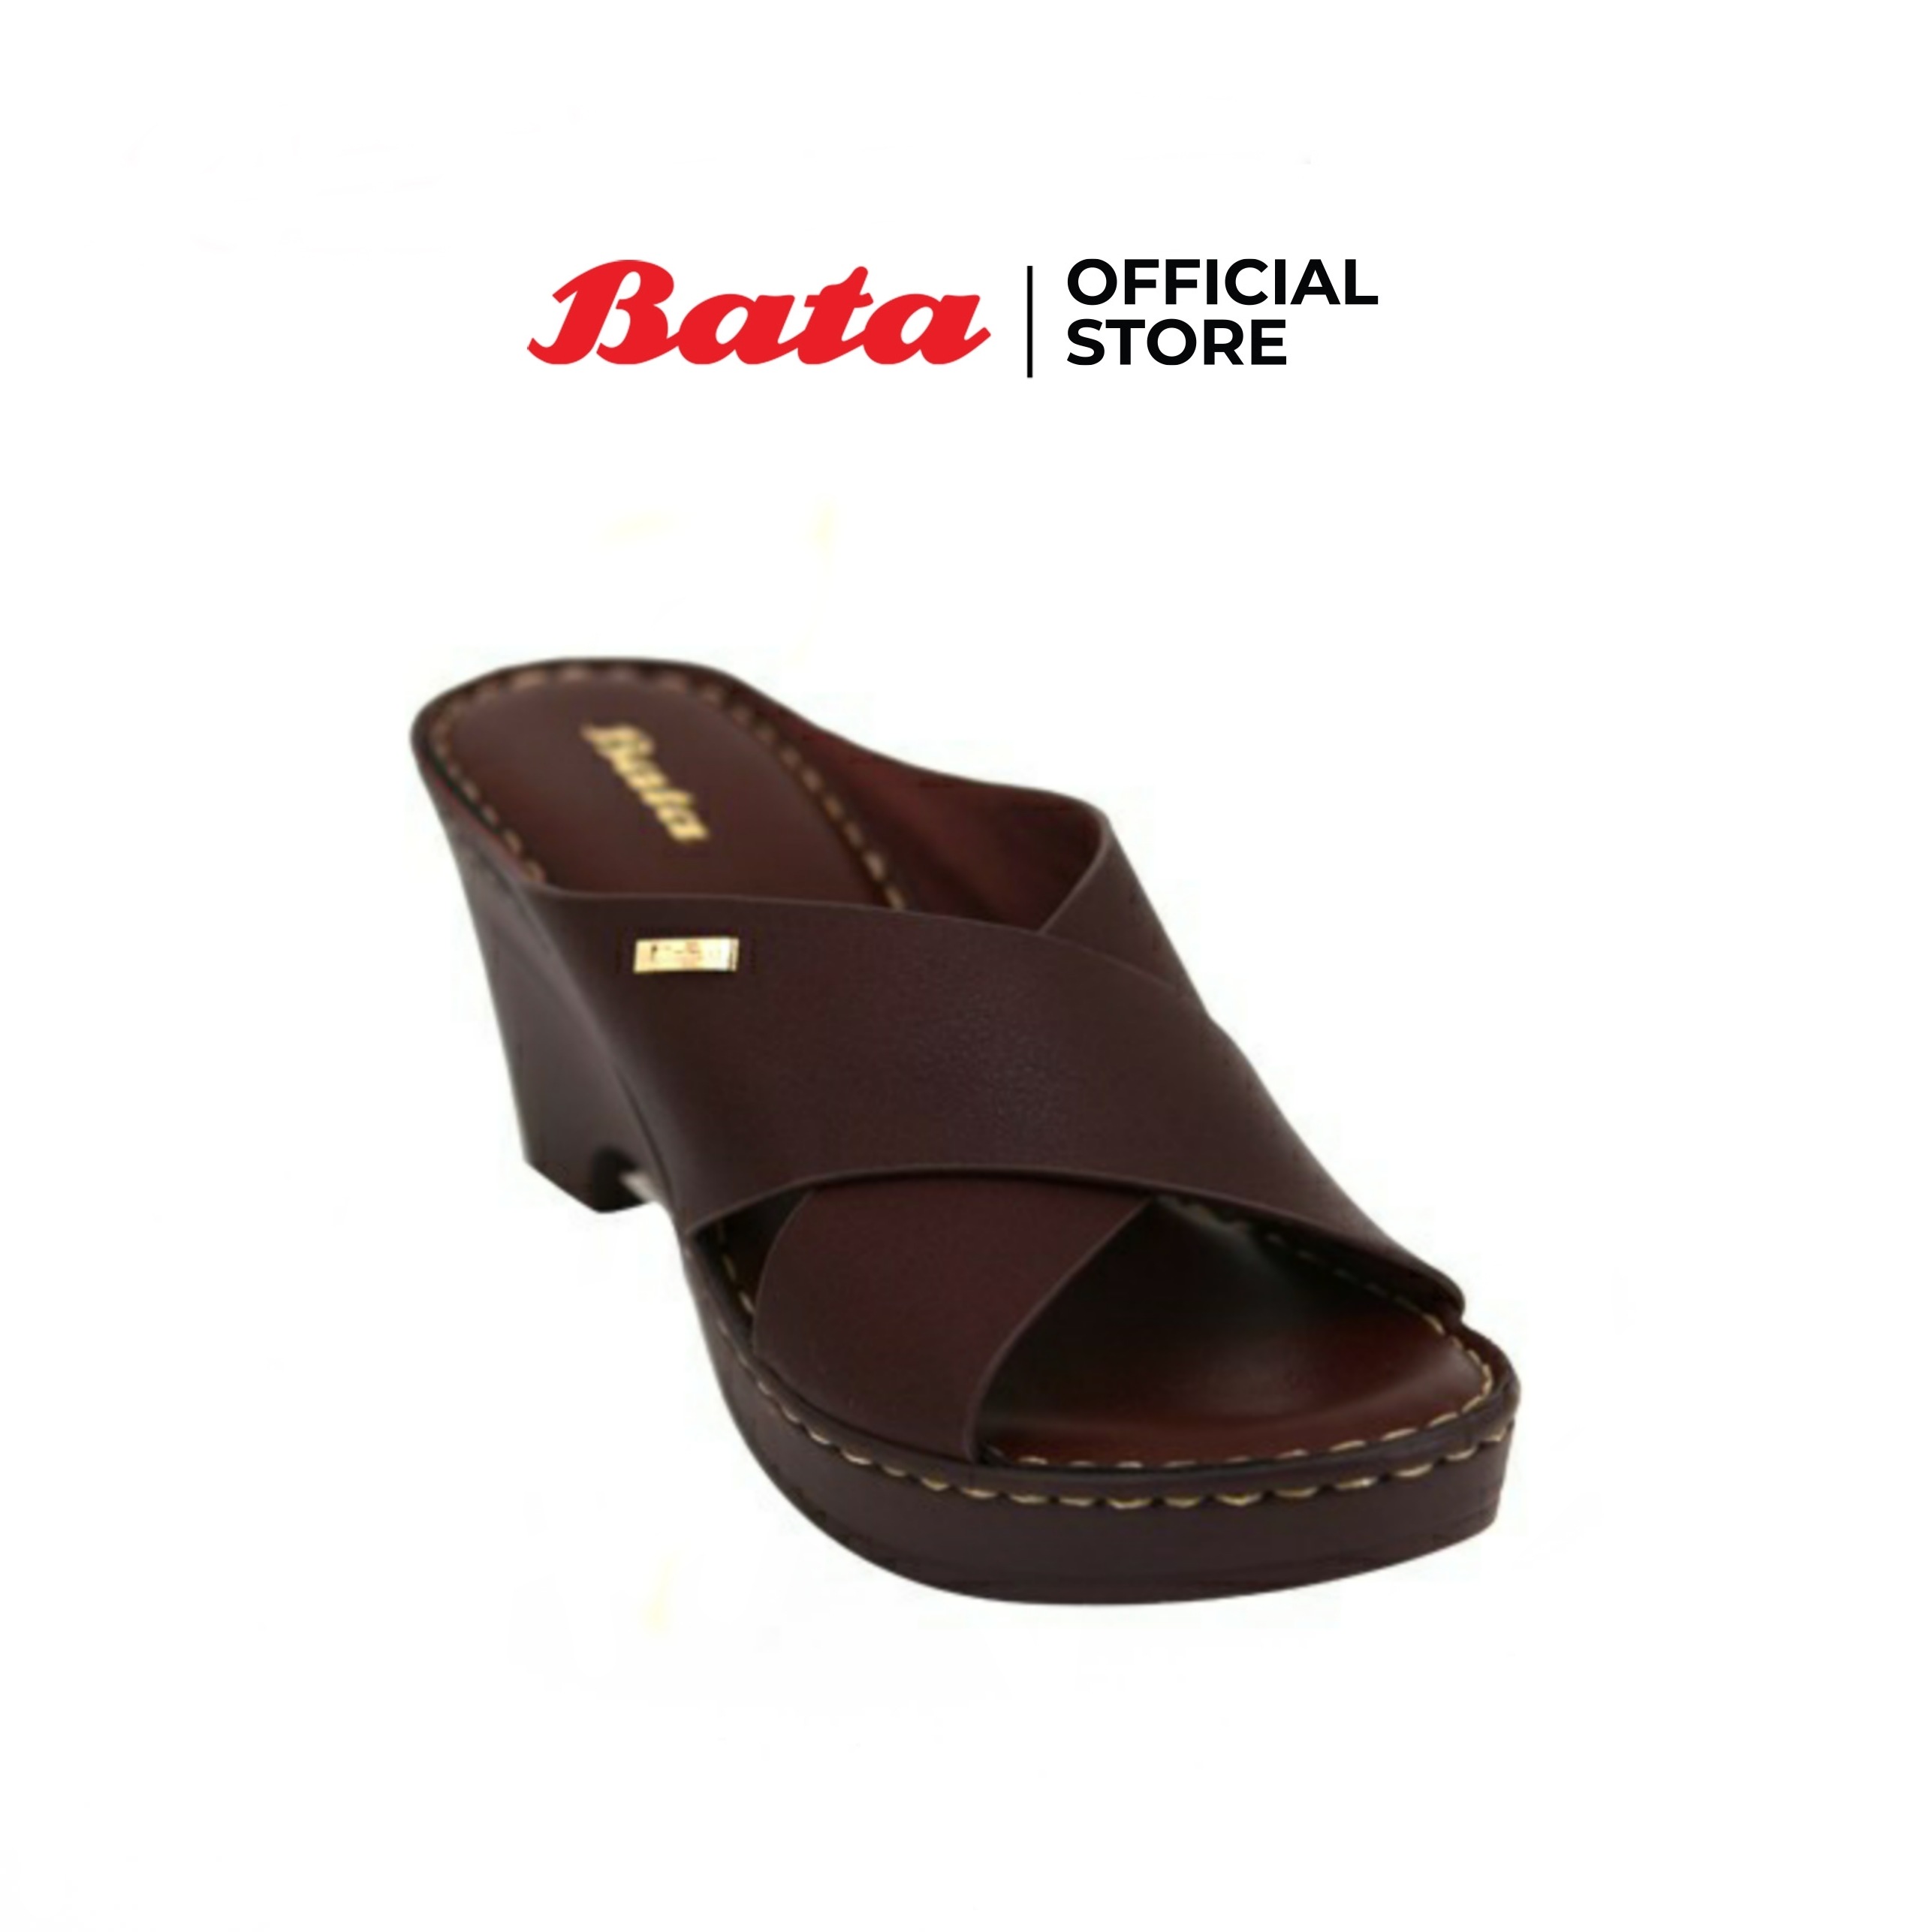 Bata LADIES'SUMMER รองเท้าส้นสูงแฟชั่น สูง 2.5 นิ้ว WEDGE (20-55MM) แบบสวมเปิดส้น สีแดง รหัส 7615711 Ladiesheel Fashion